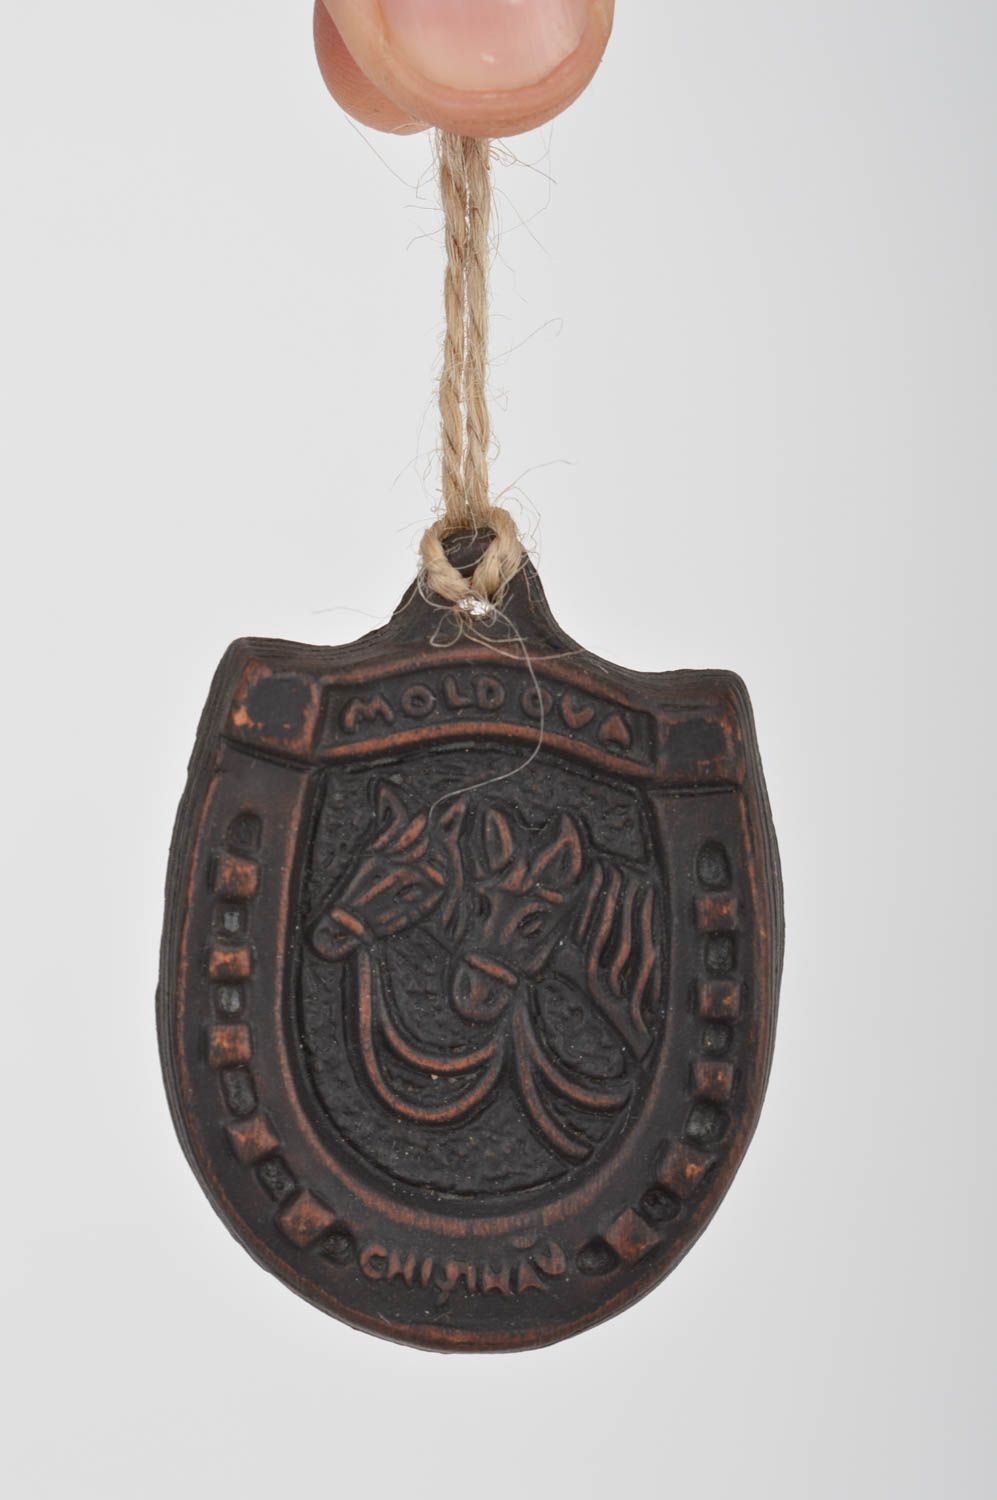 Handmade ceramic souvenir keychain in the shape of horseshoe kilned with milk photo 3